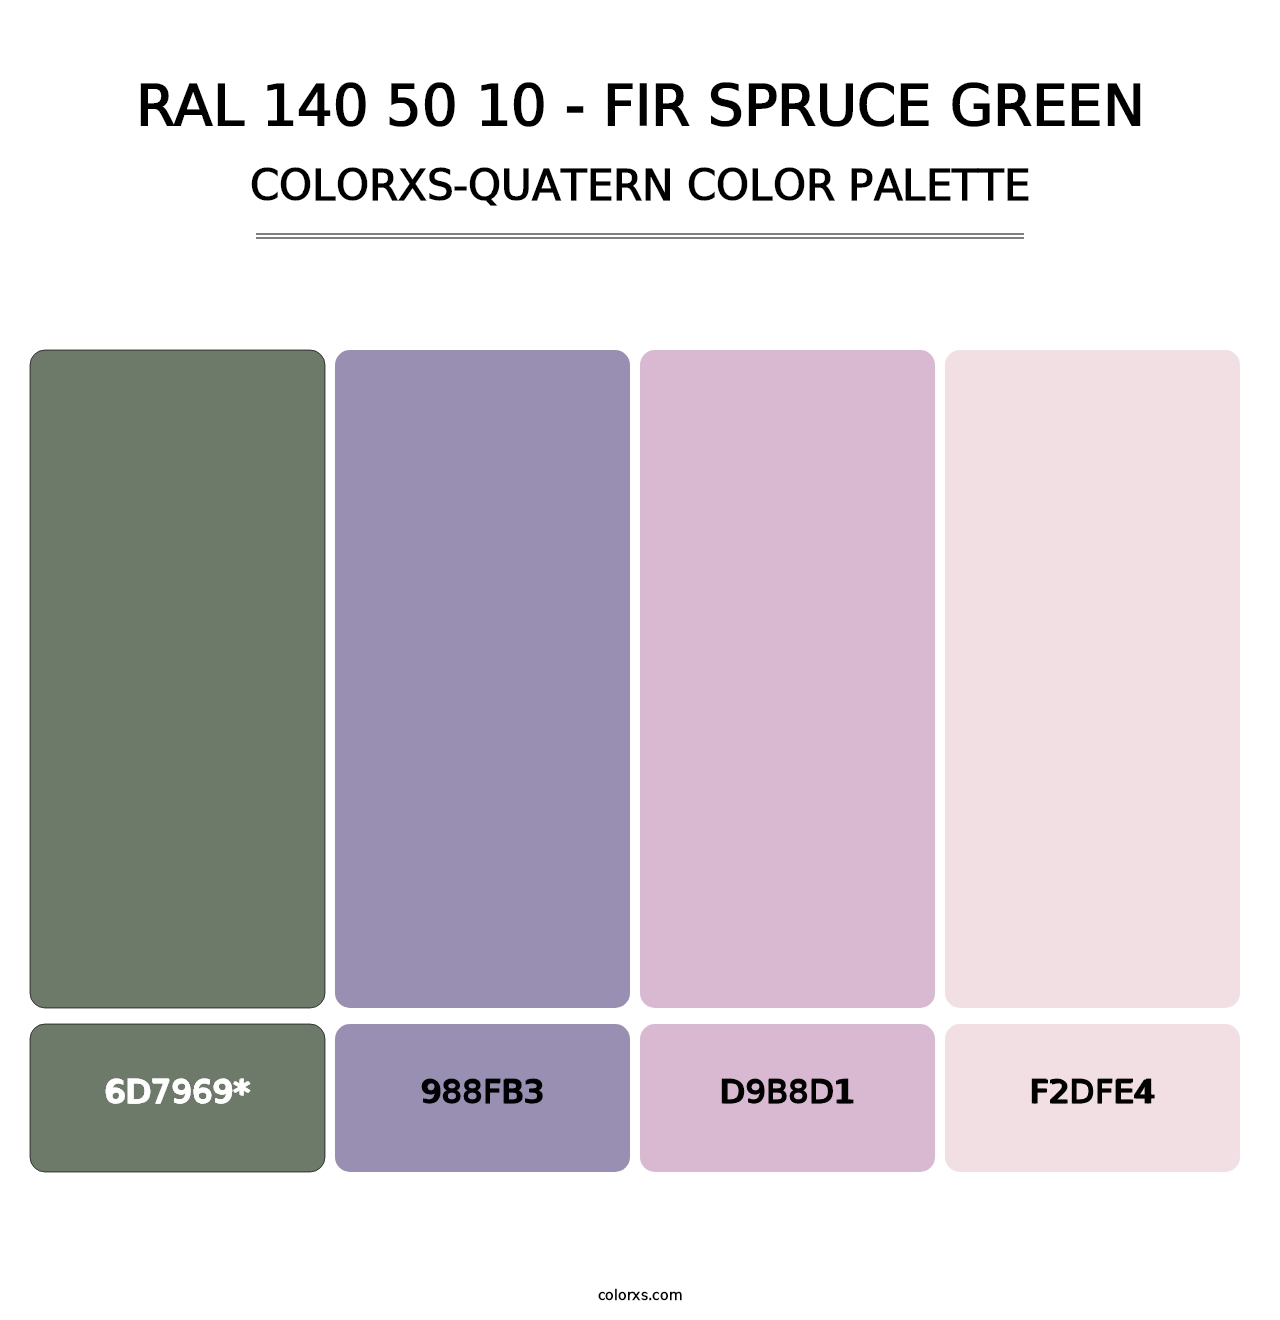 RAL 140 50 10 - Fir Spruce Green - Colorxs Quatern Palette